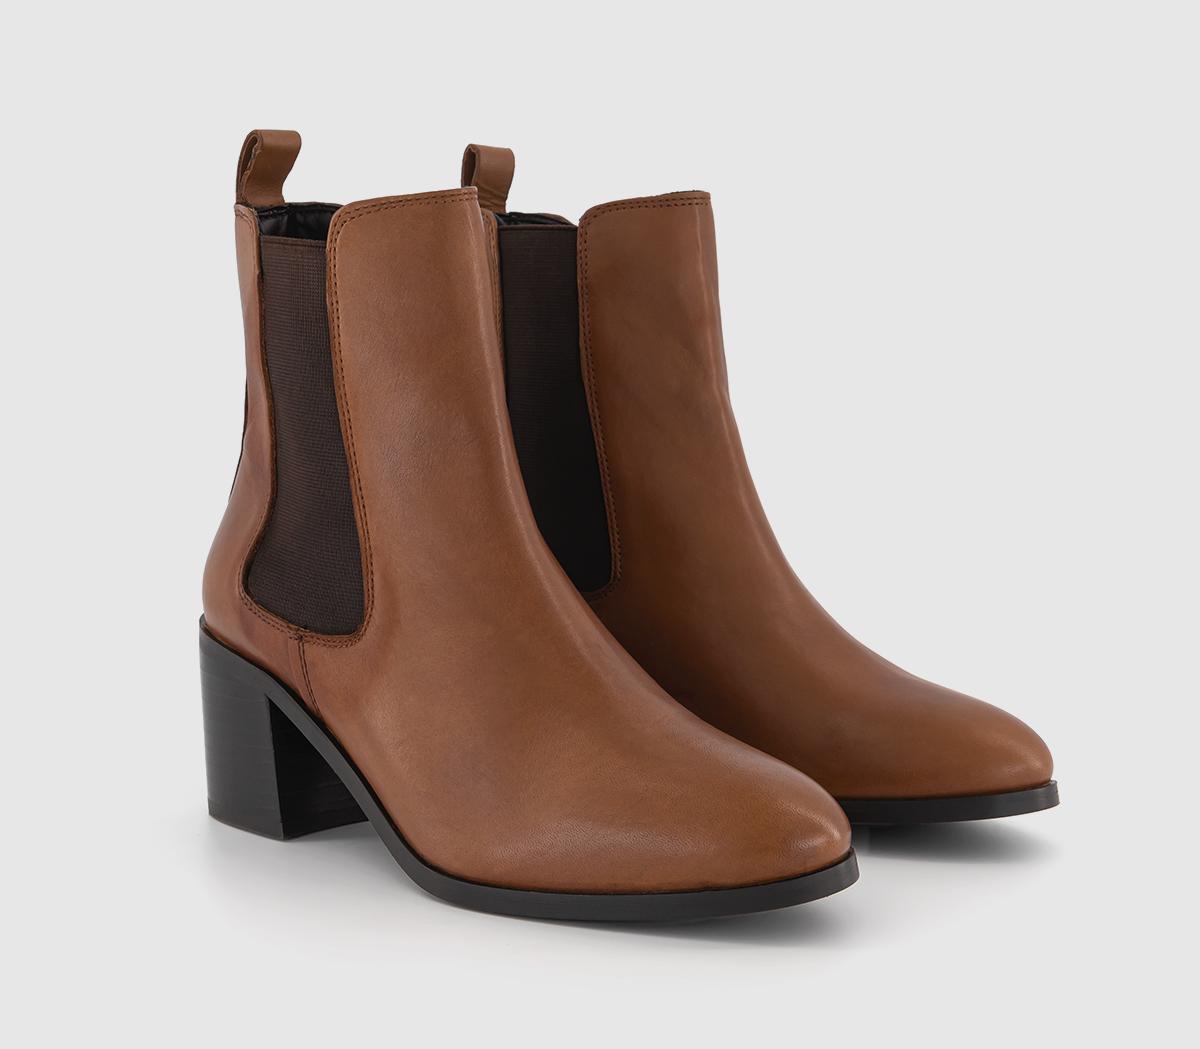 OFFICE Womens Aspect Block Heel Chelsea Boots Tan Leather, 8